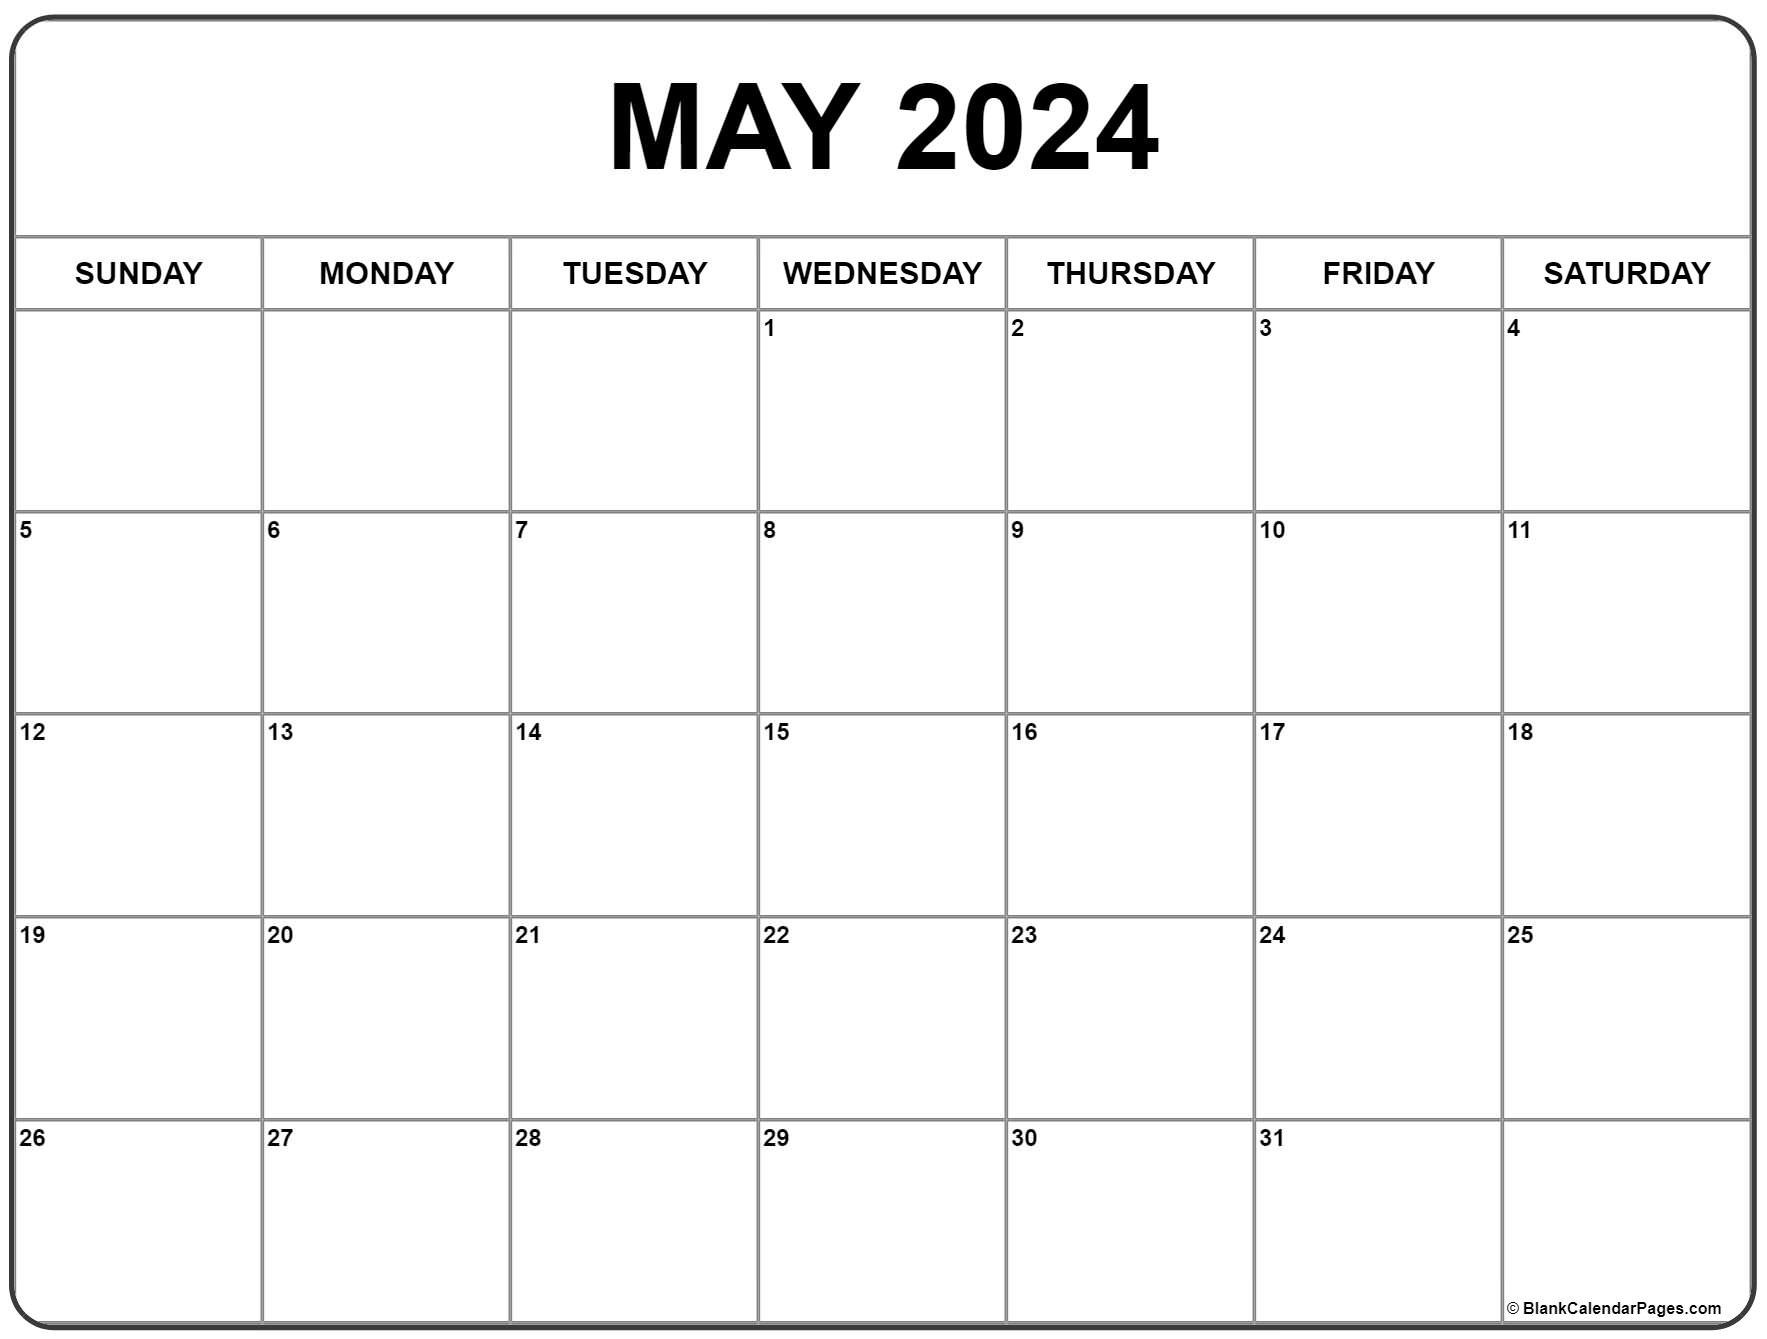 May 2024 Calendar | Free Printable Calendar in Free Printable Blank Calendar 2024 May